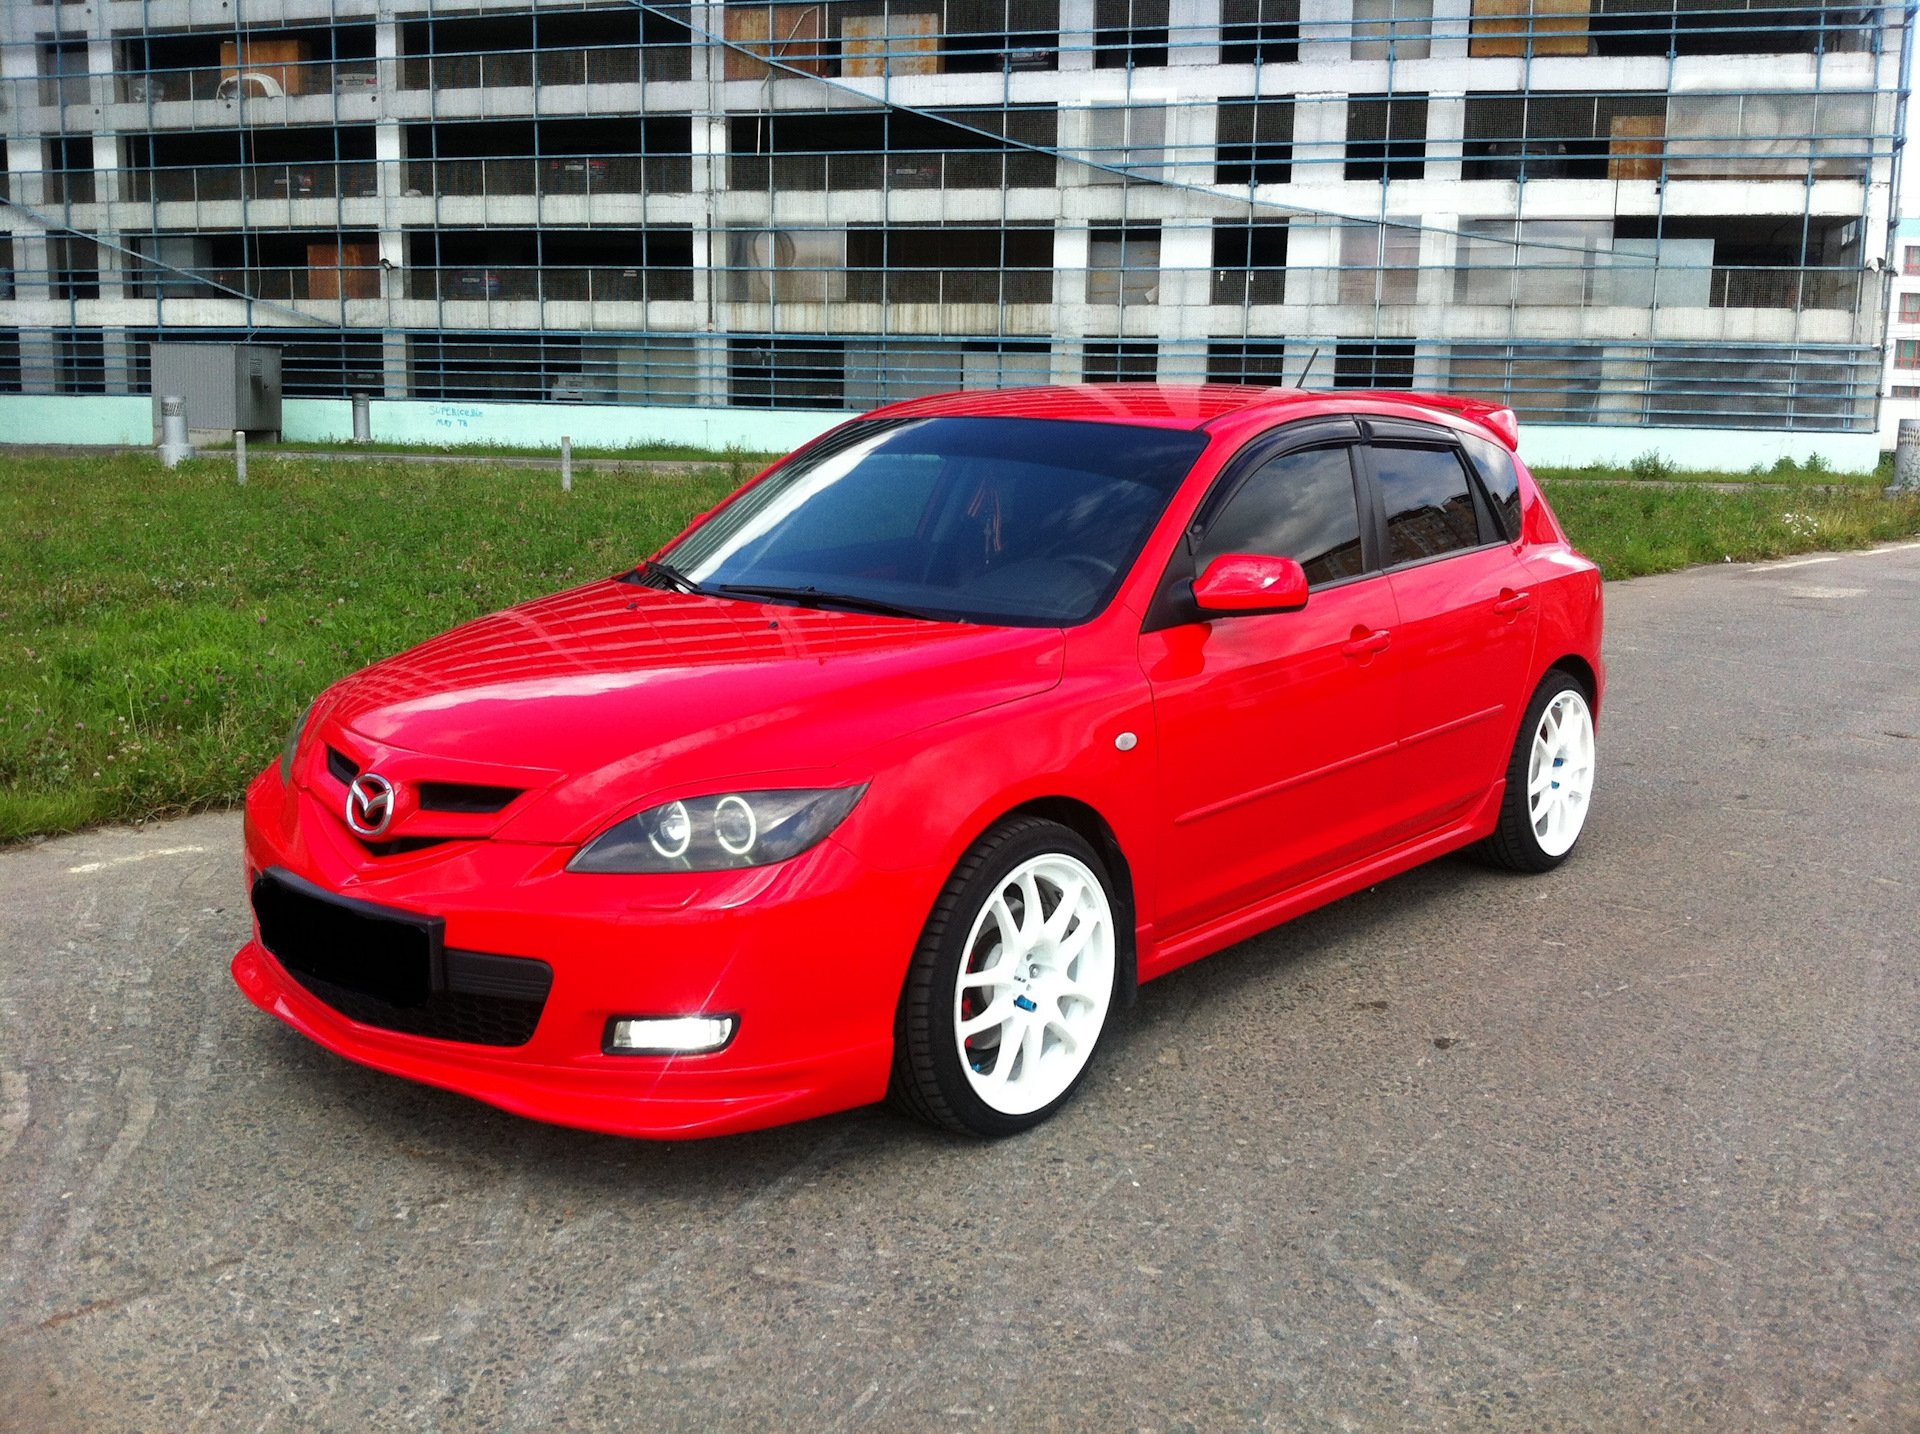 Мазда 3 2008 2.0. Mazda 3 2. Mazda Mazda 3 2008. Mazda 3 Sport 2.0 2008. Мазда 3 хэтчбек 2008 красная.